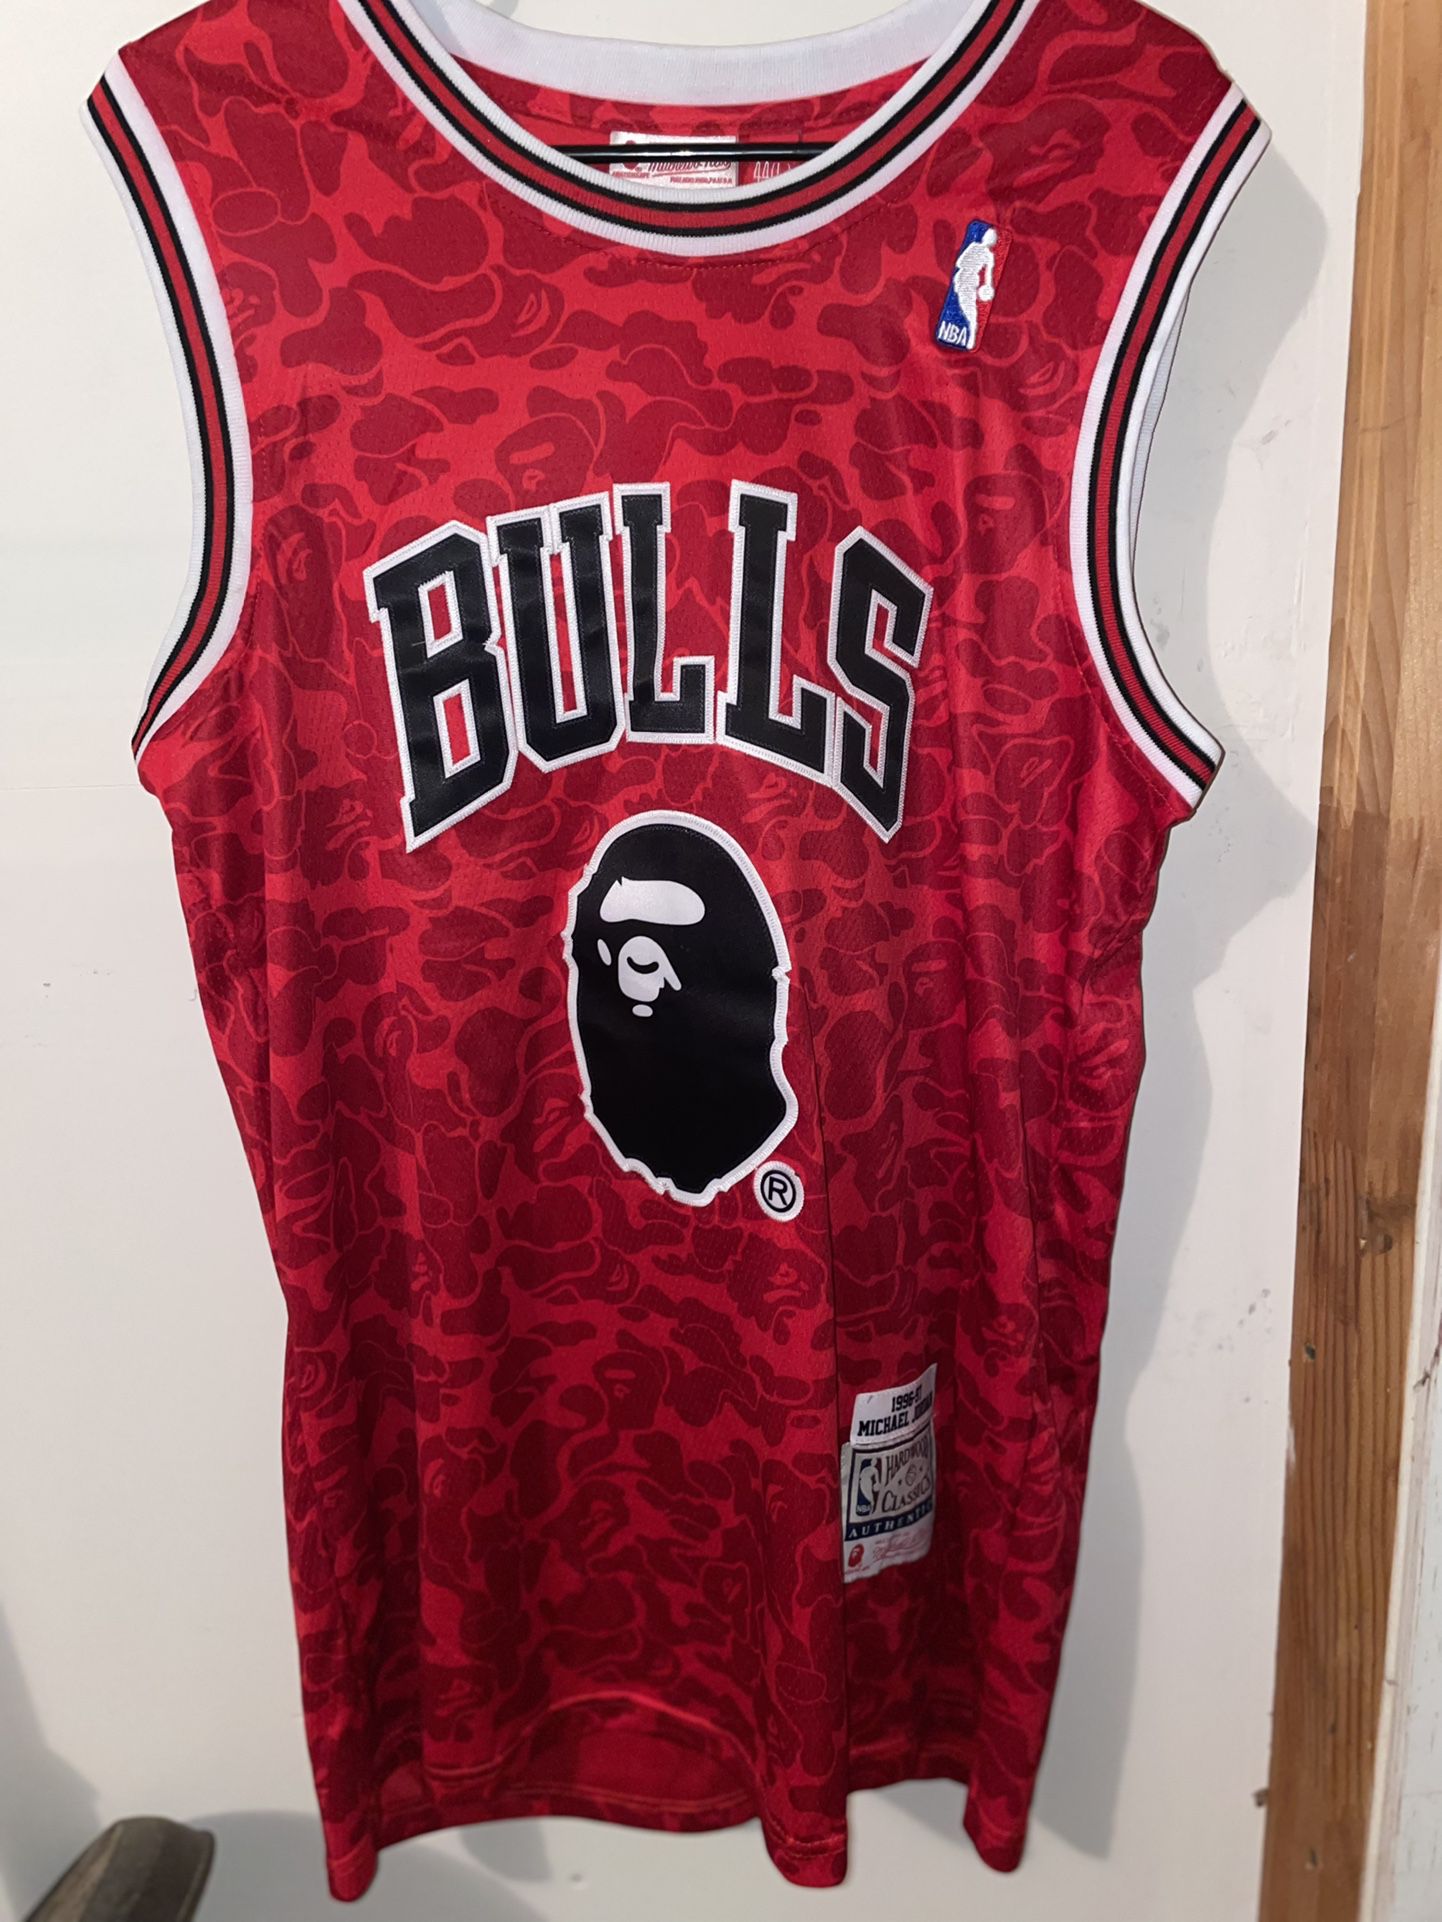 Bulls Jersey 